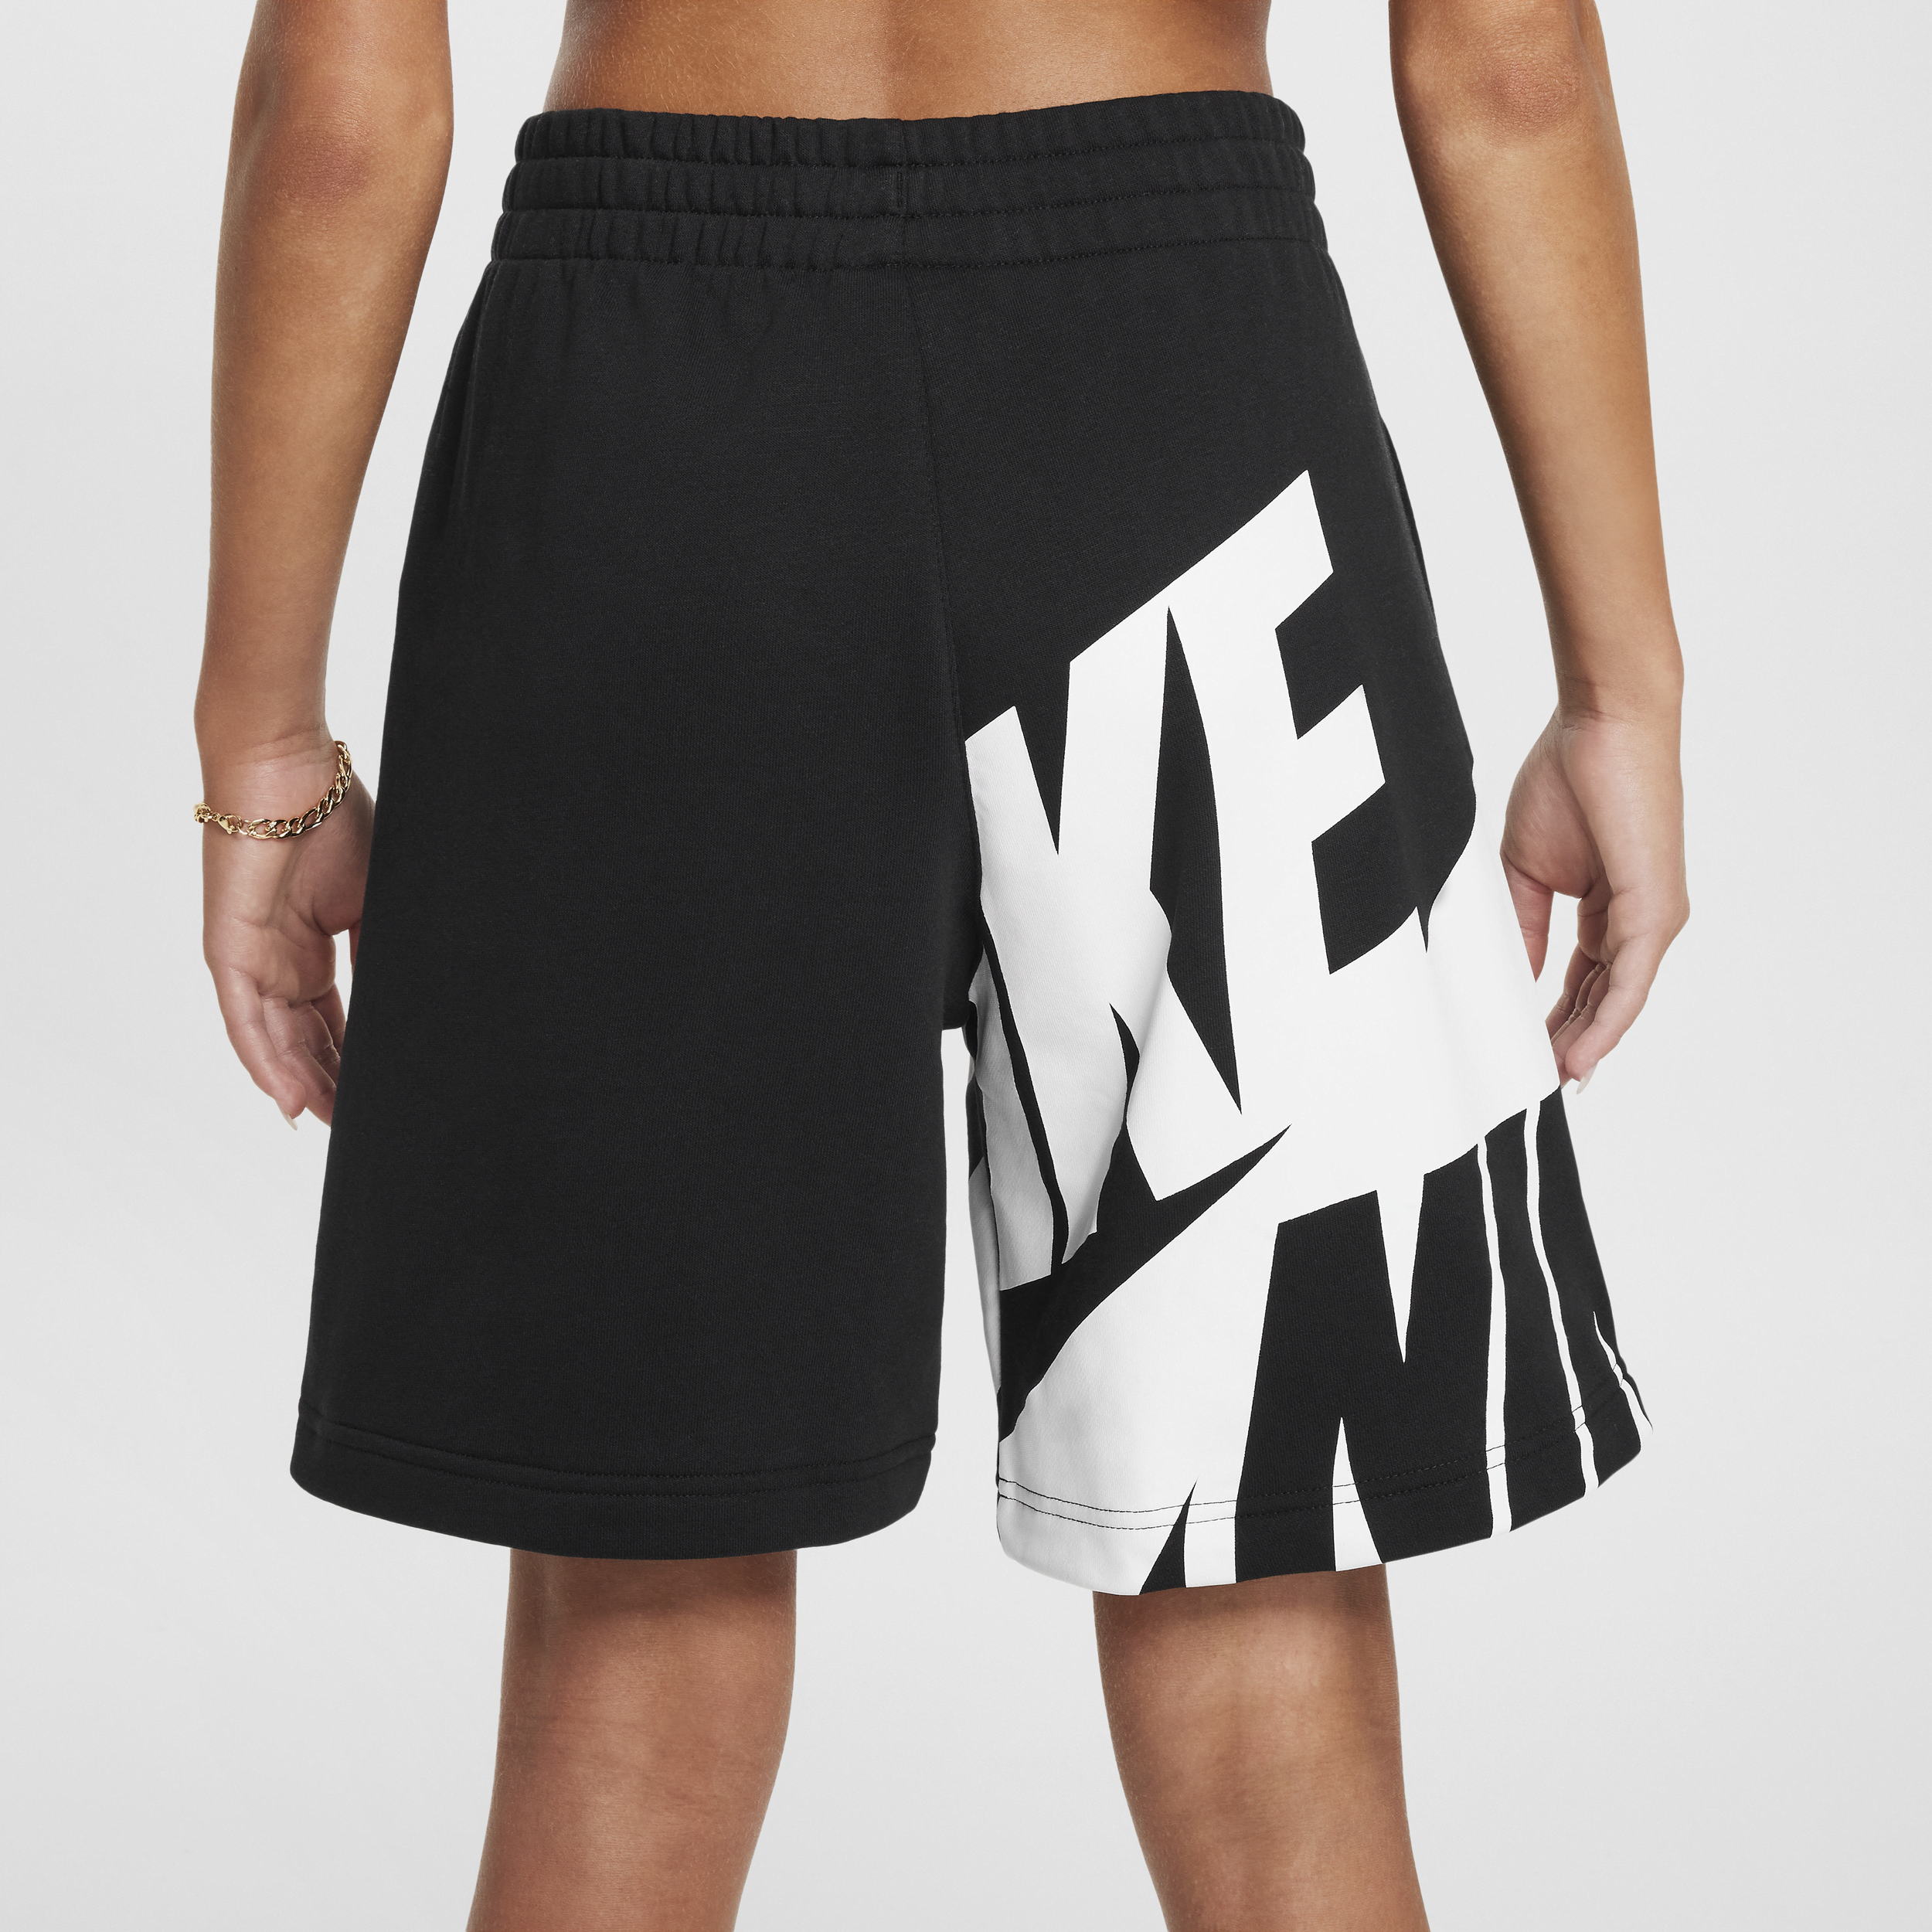 Nike Air meisjesshorts van sweatstof Zwart